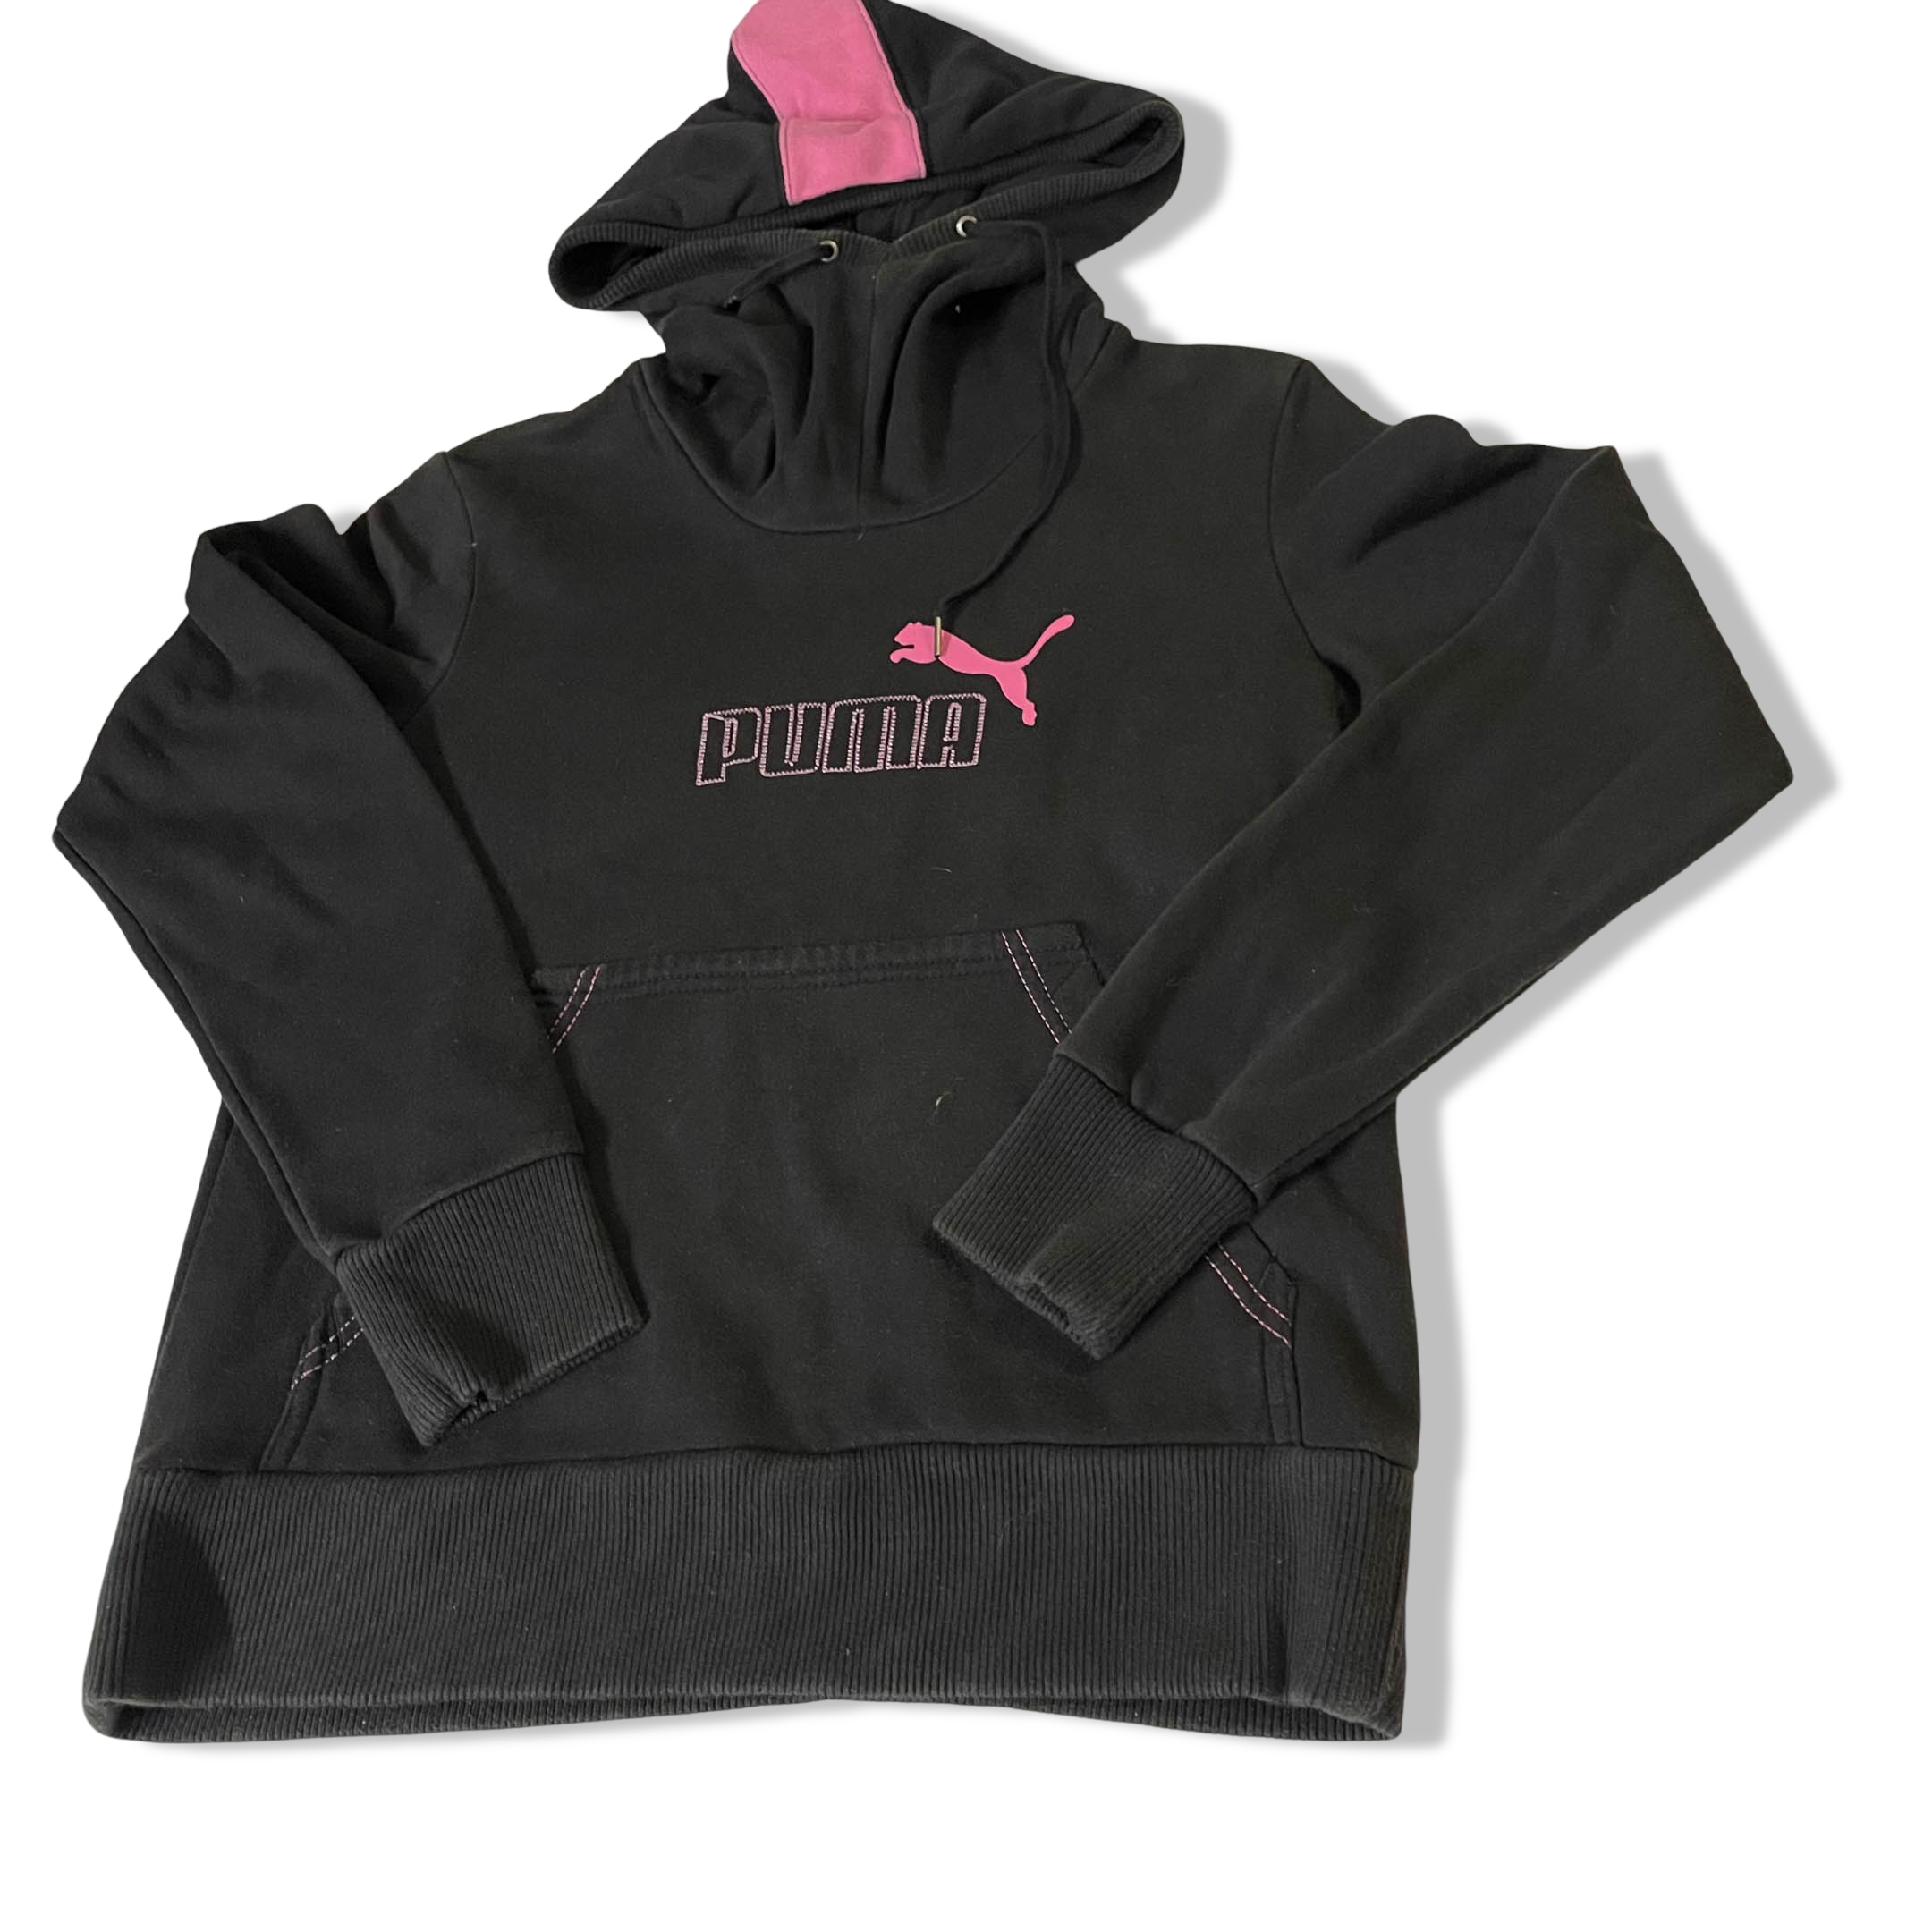 Vintage Black women Puma big logo hoodie in S/M|L25 W18| SKU 3821